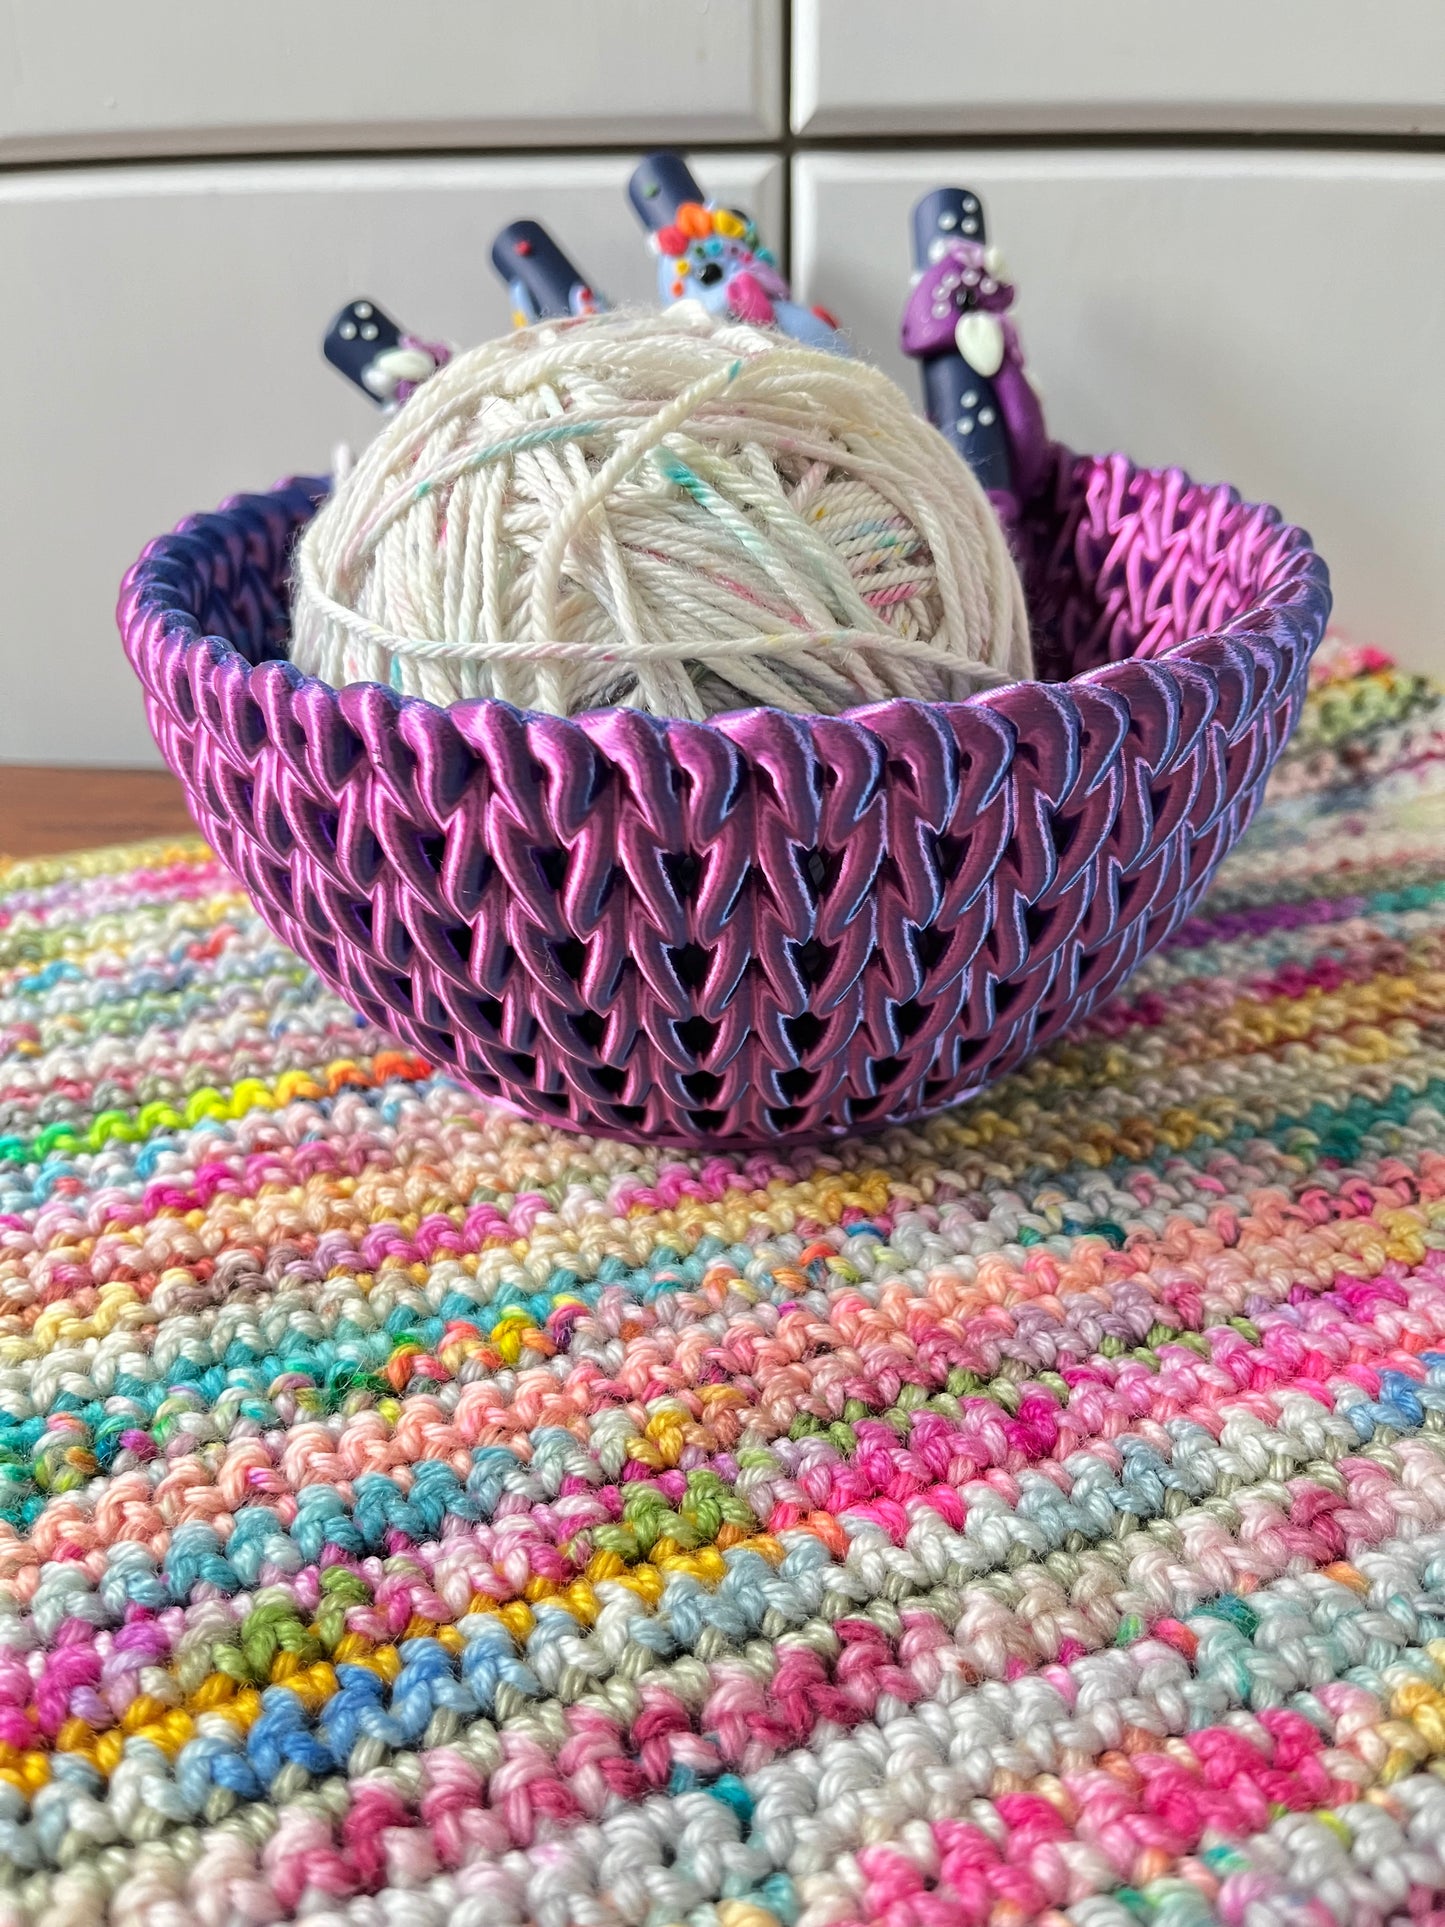 3D Printed Knitted Look Bowl, Yarn Storage, Trinket Dish, Crochet Photo Props